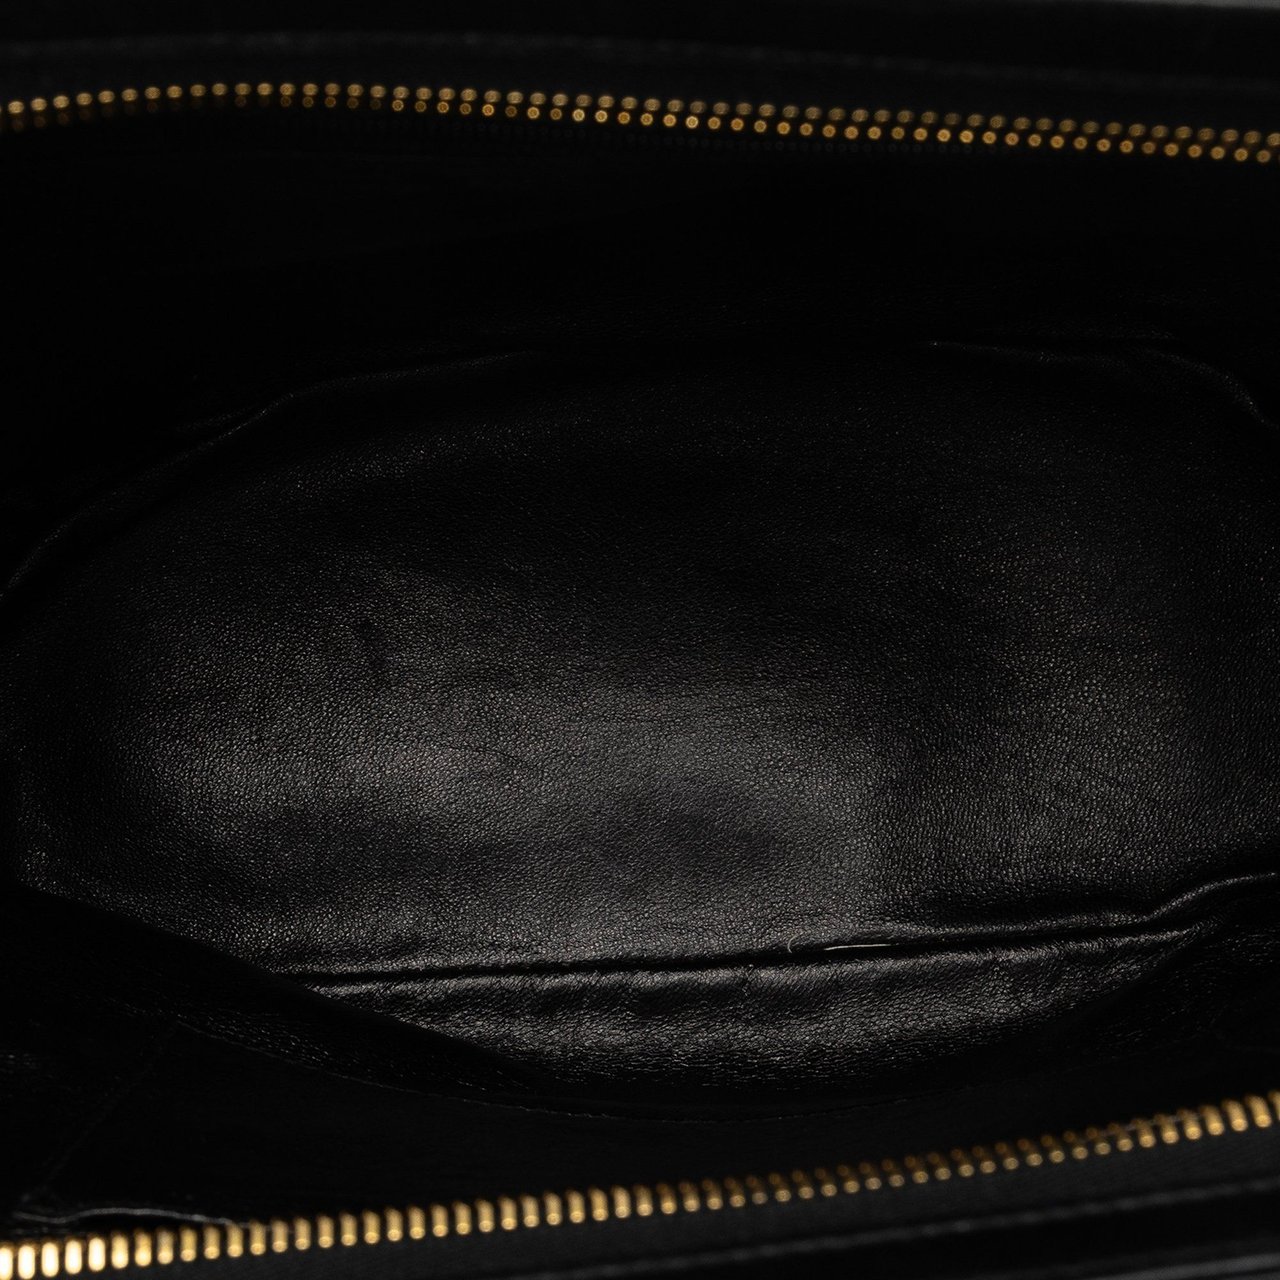 Chanel Matelasse Lambskin Leather Shoulder Bag Zwart